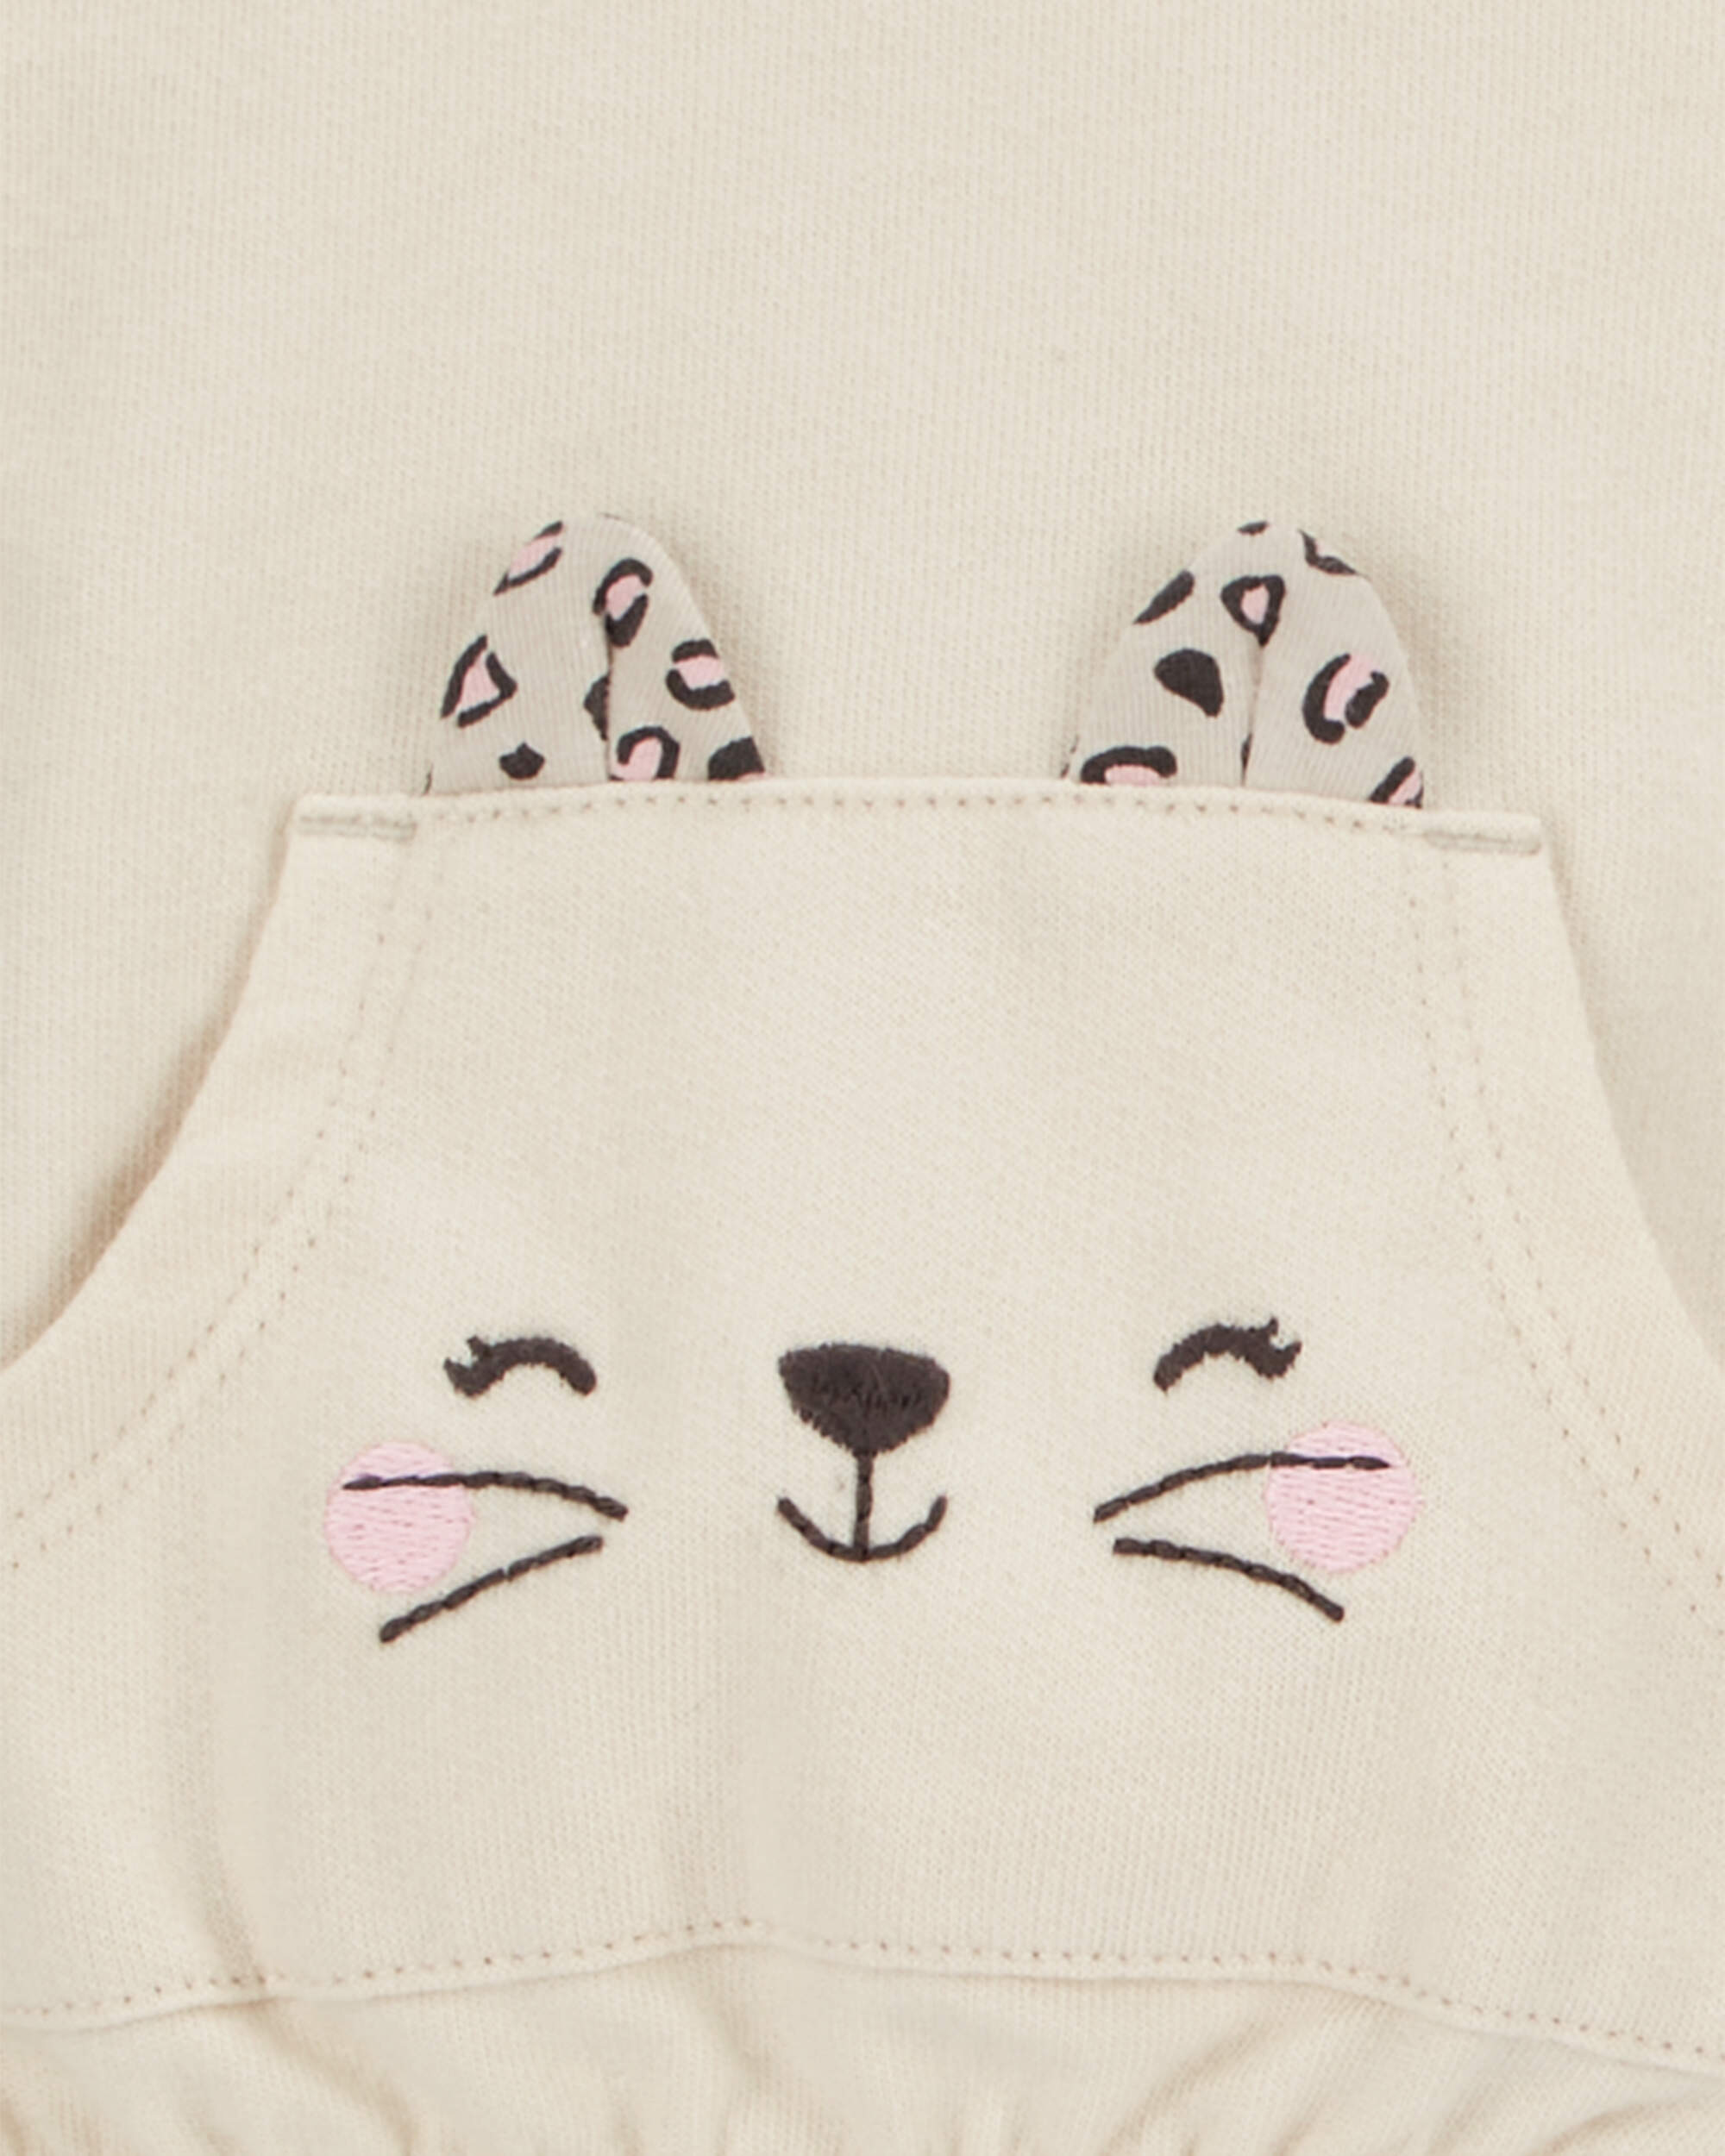 Baby 3-Piece Leopard Little Cardigan Set